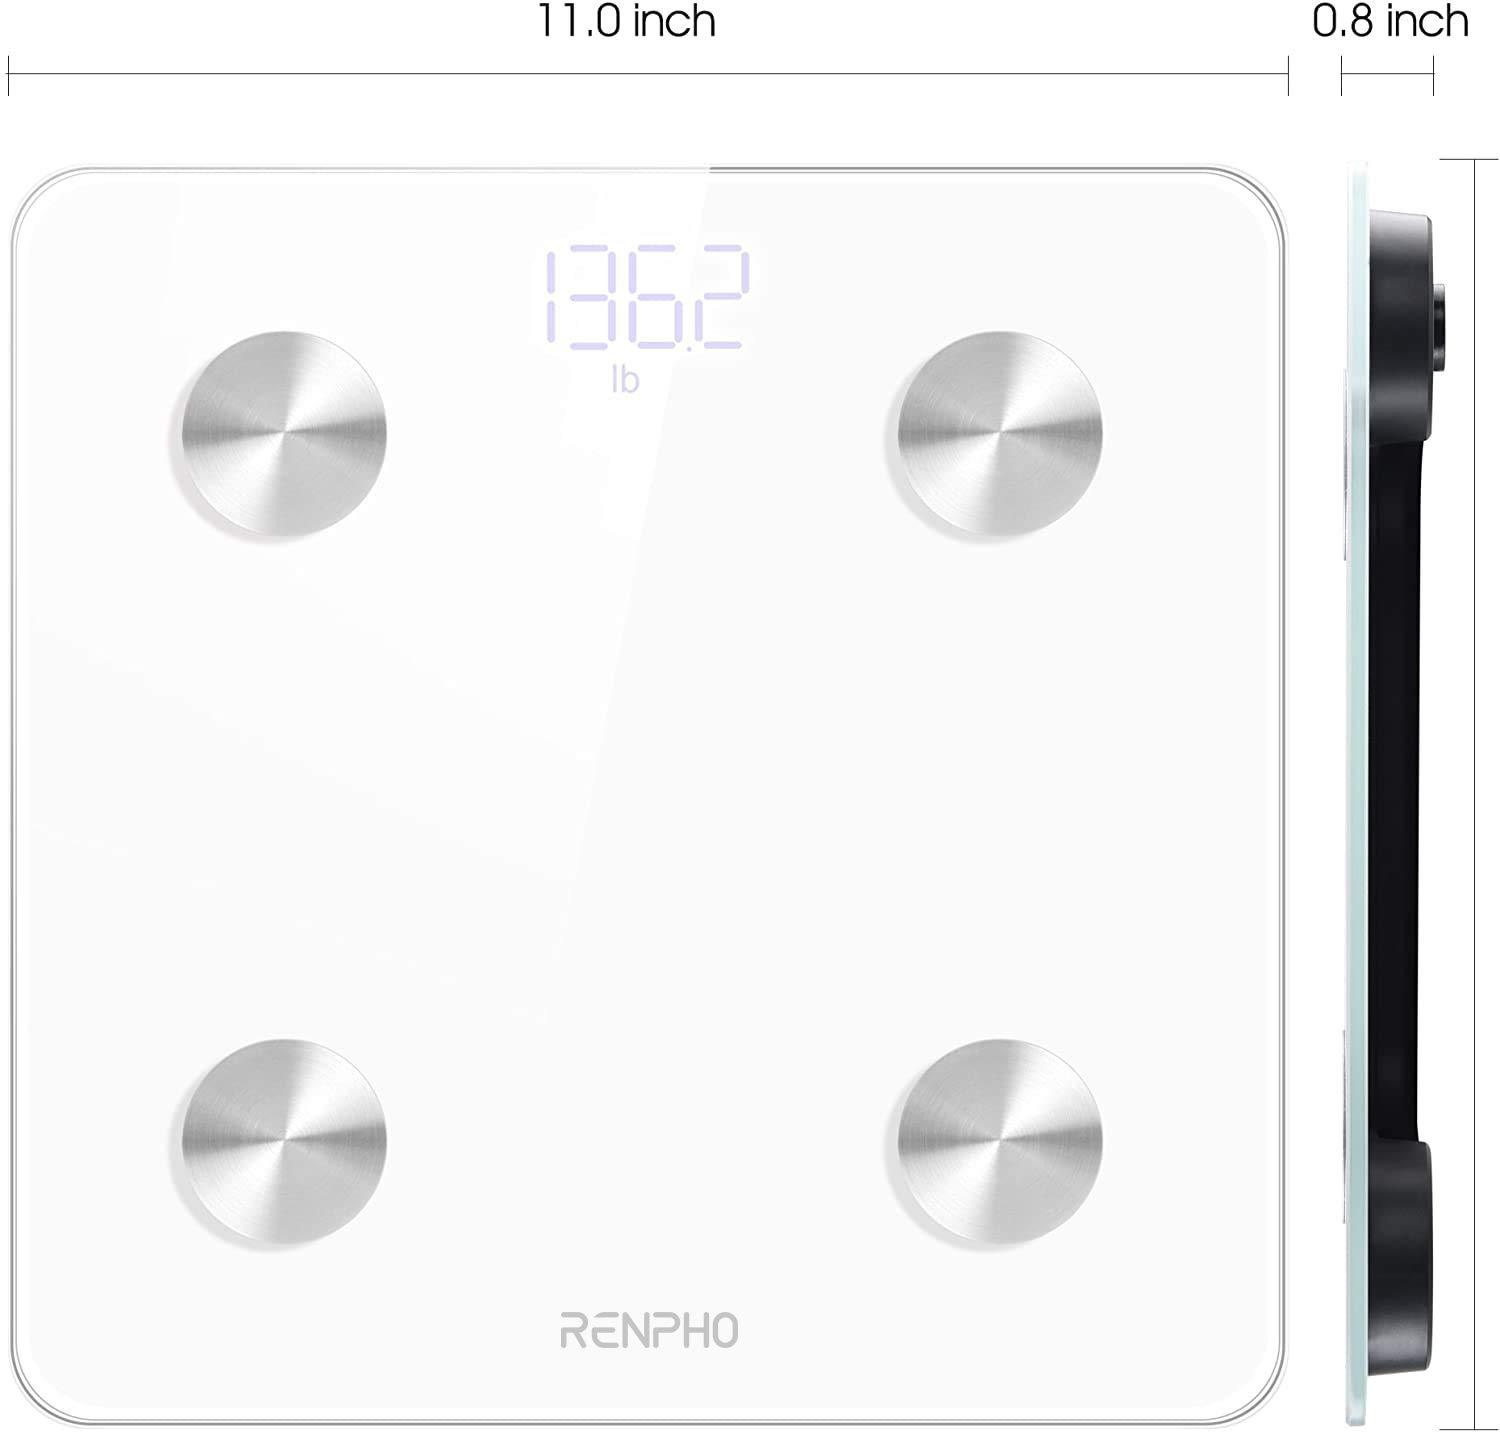  RENPHO Smart Scale for Body Weight, Digital Bathroom